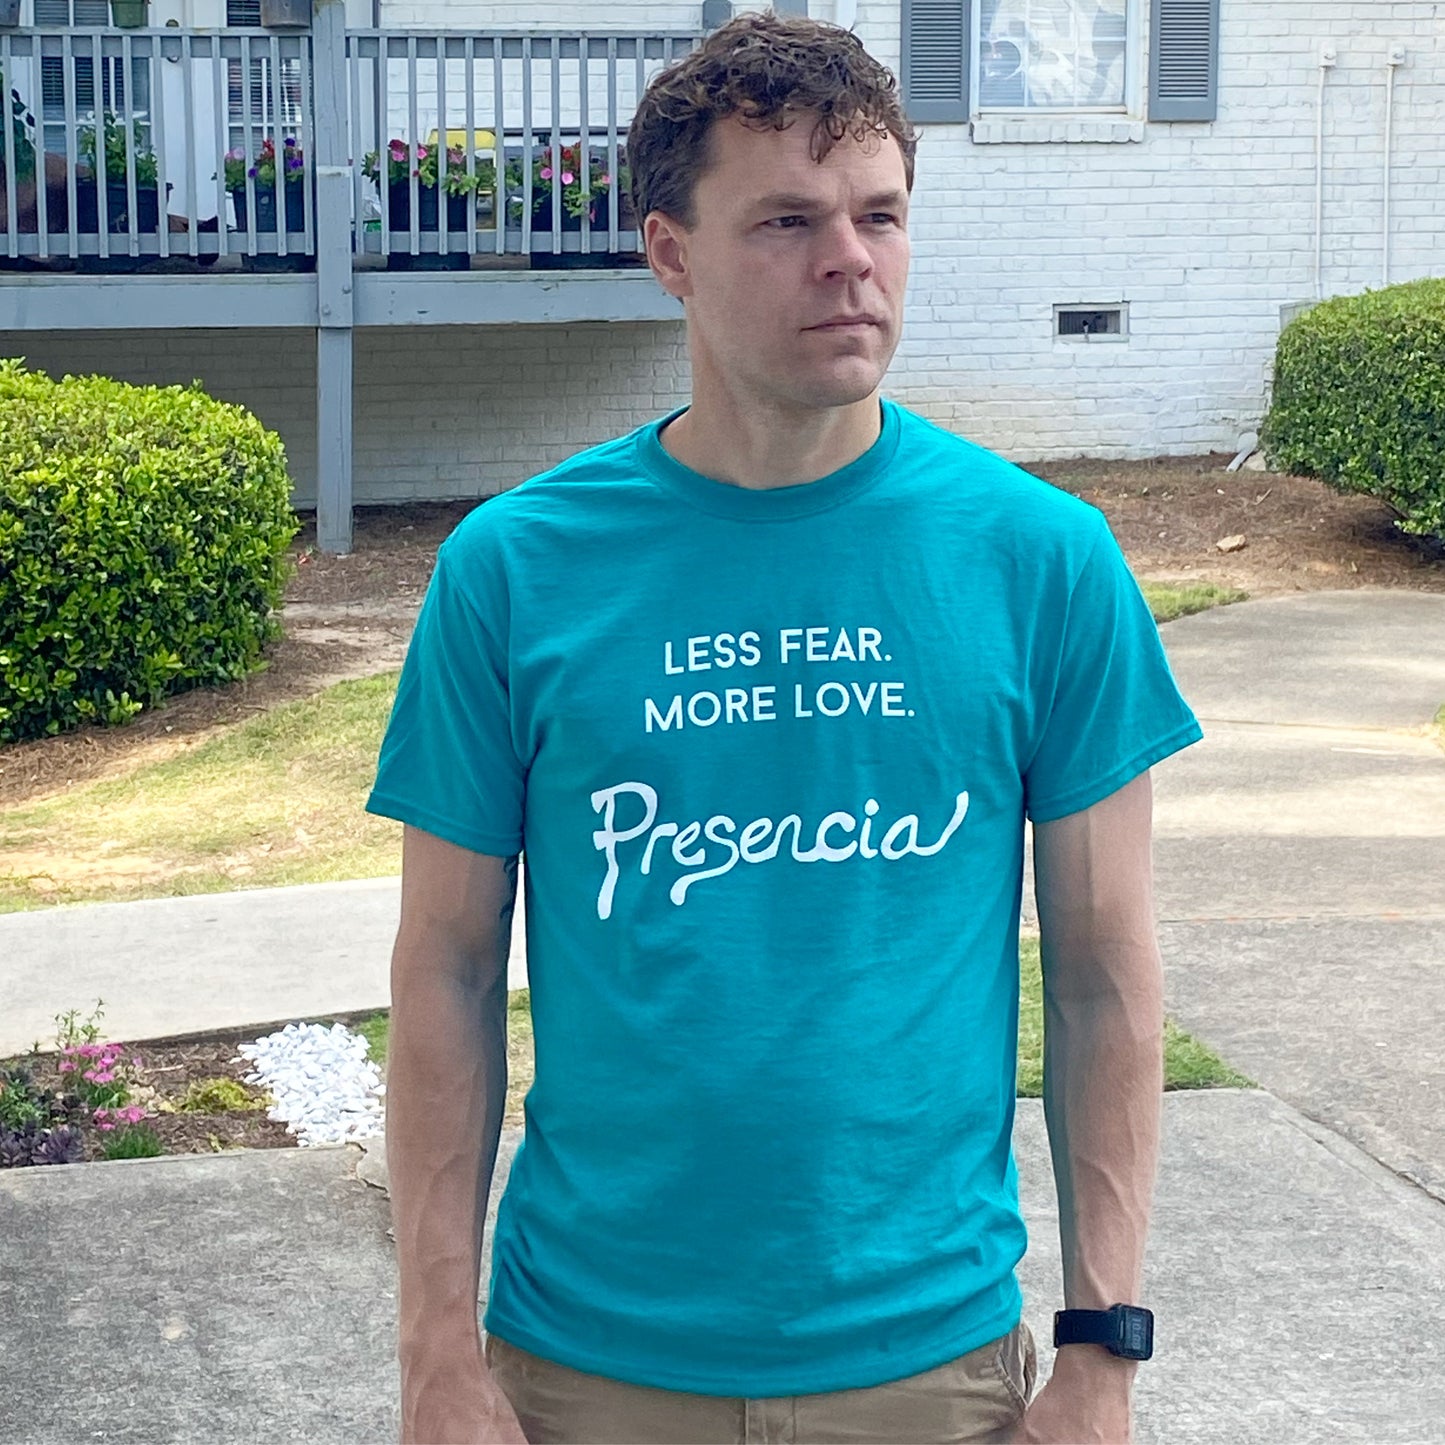 Less Fear. More Love. Unisex T-Shirt.